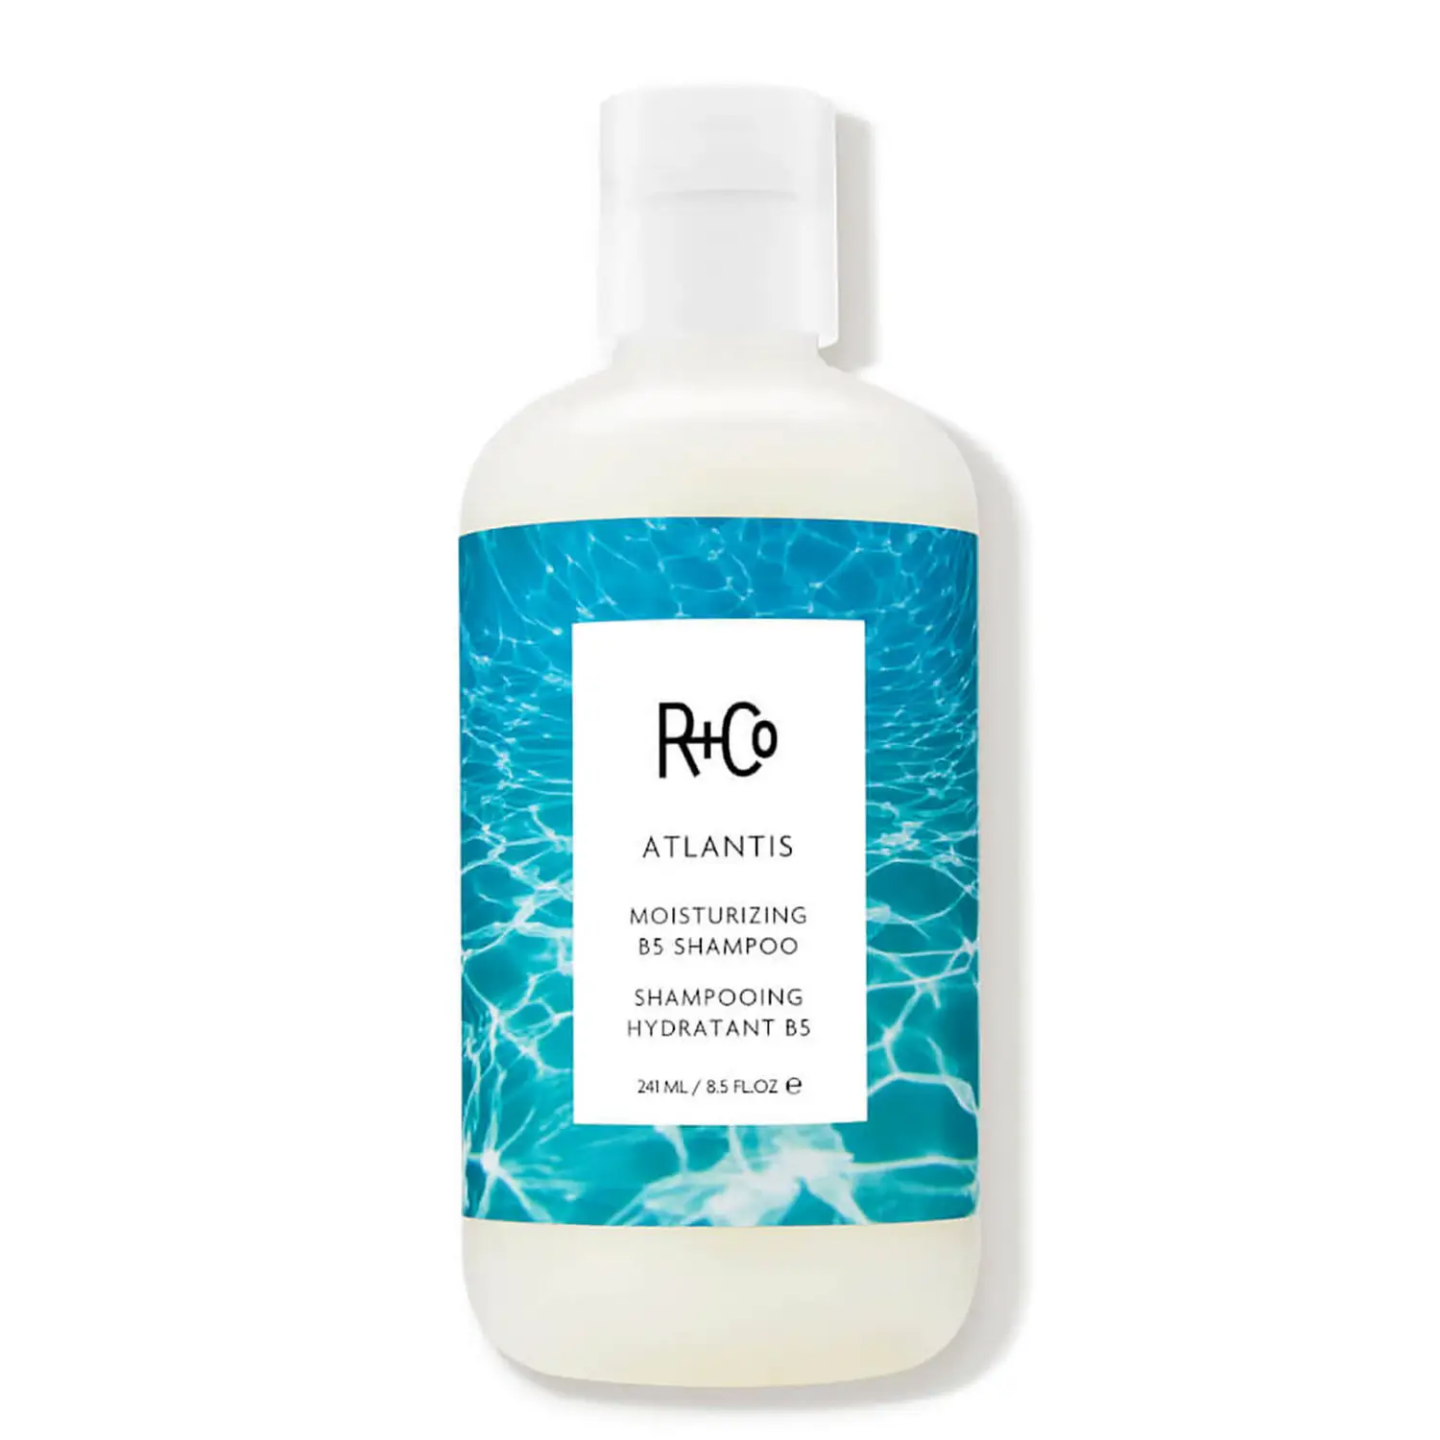 Best Smelling Shampoos for Men - R+Co